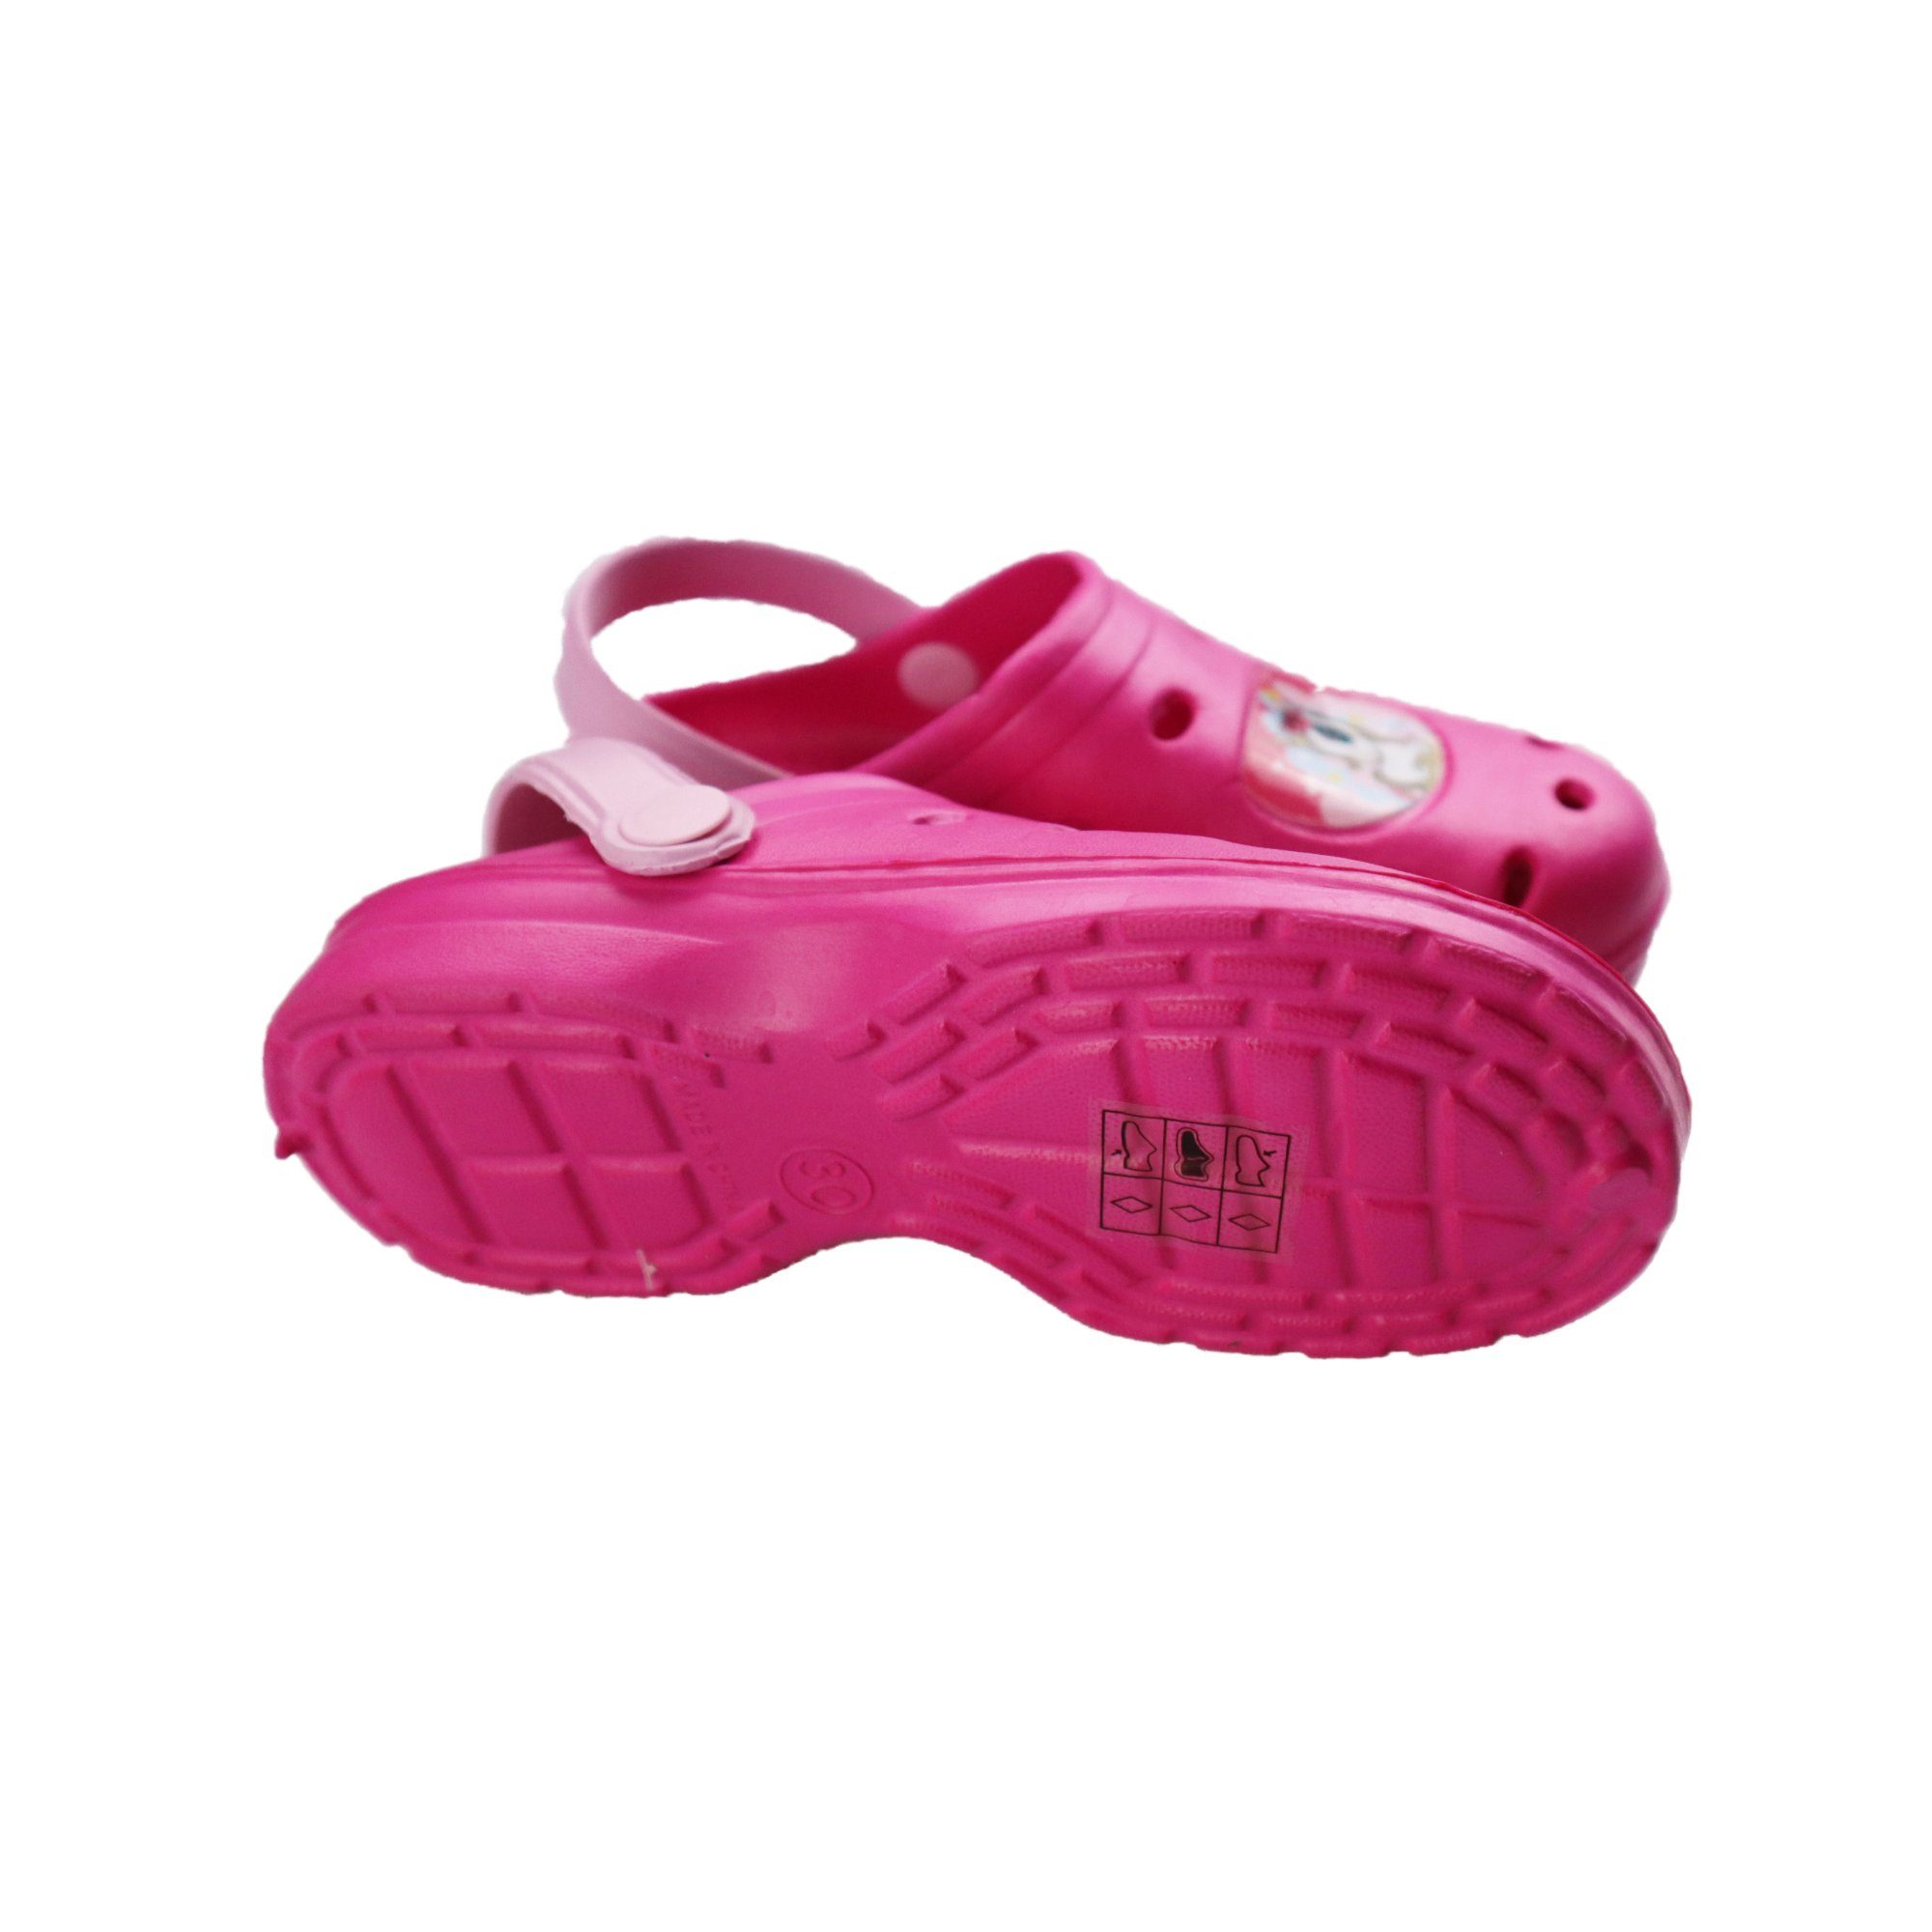 WS-Trend Süßes Einhorn Unicorn Kinder Gr. Badeschuhe Pink Clog Sandalen bis 32 22